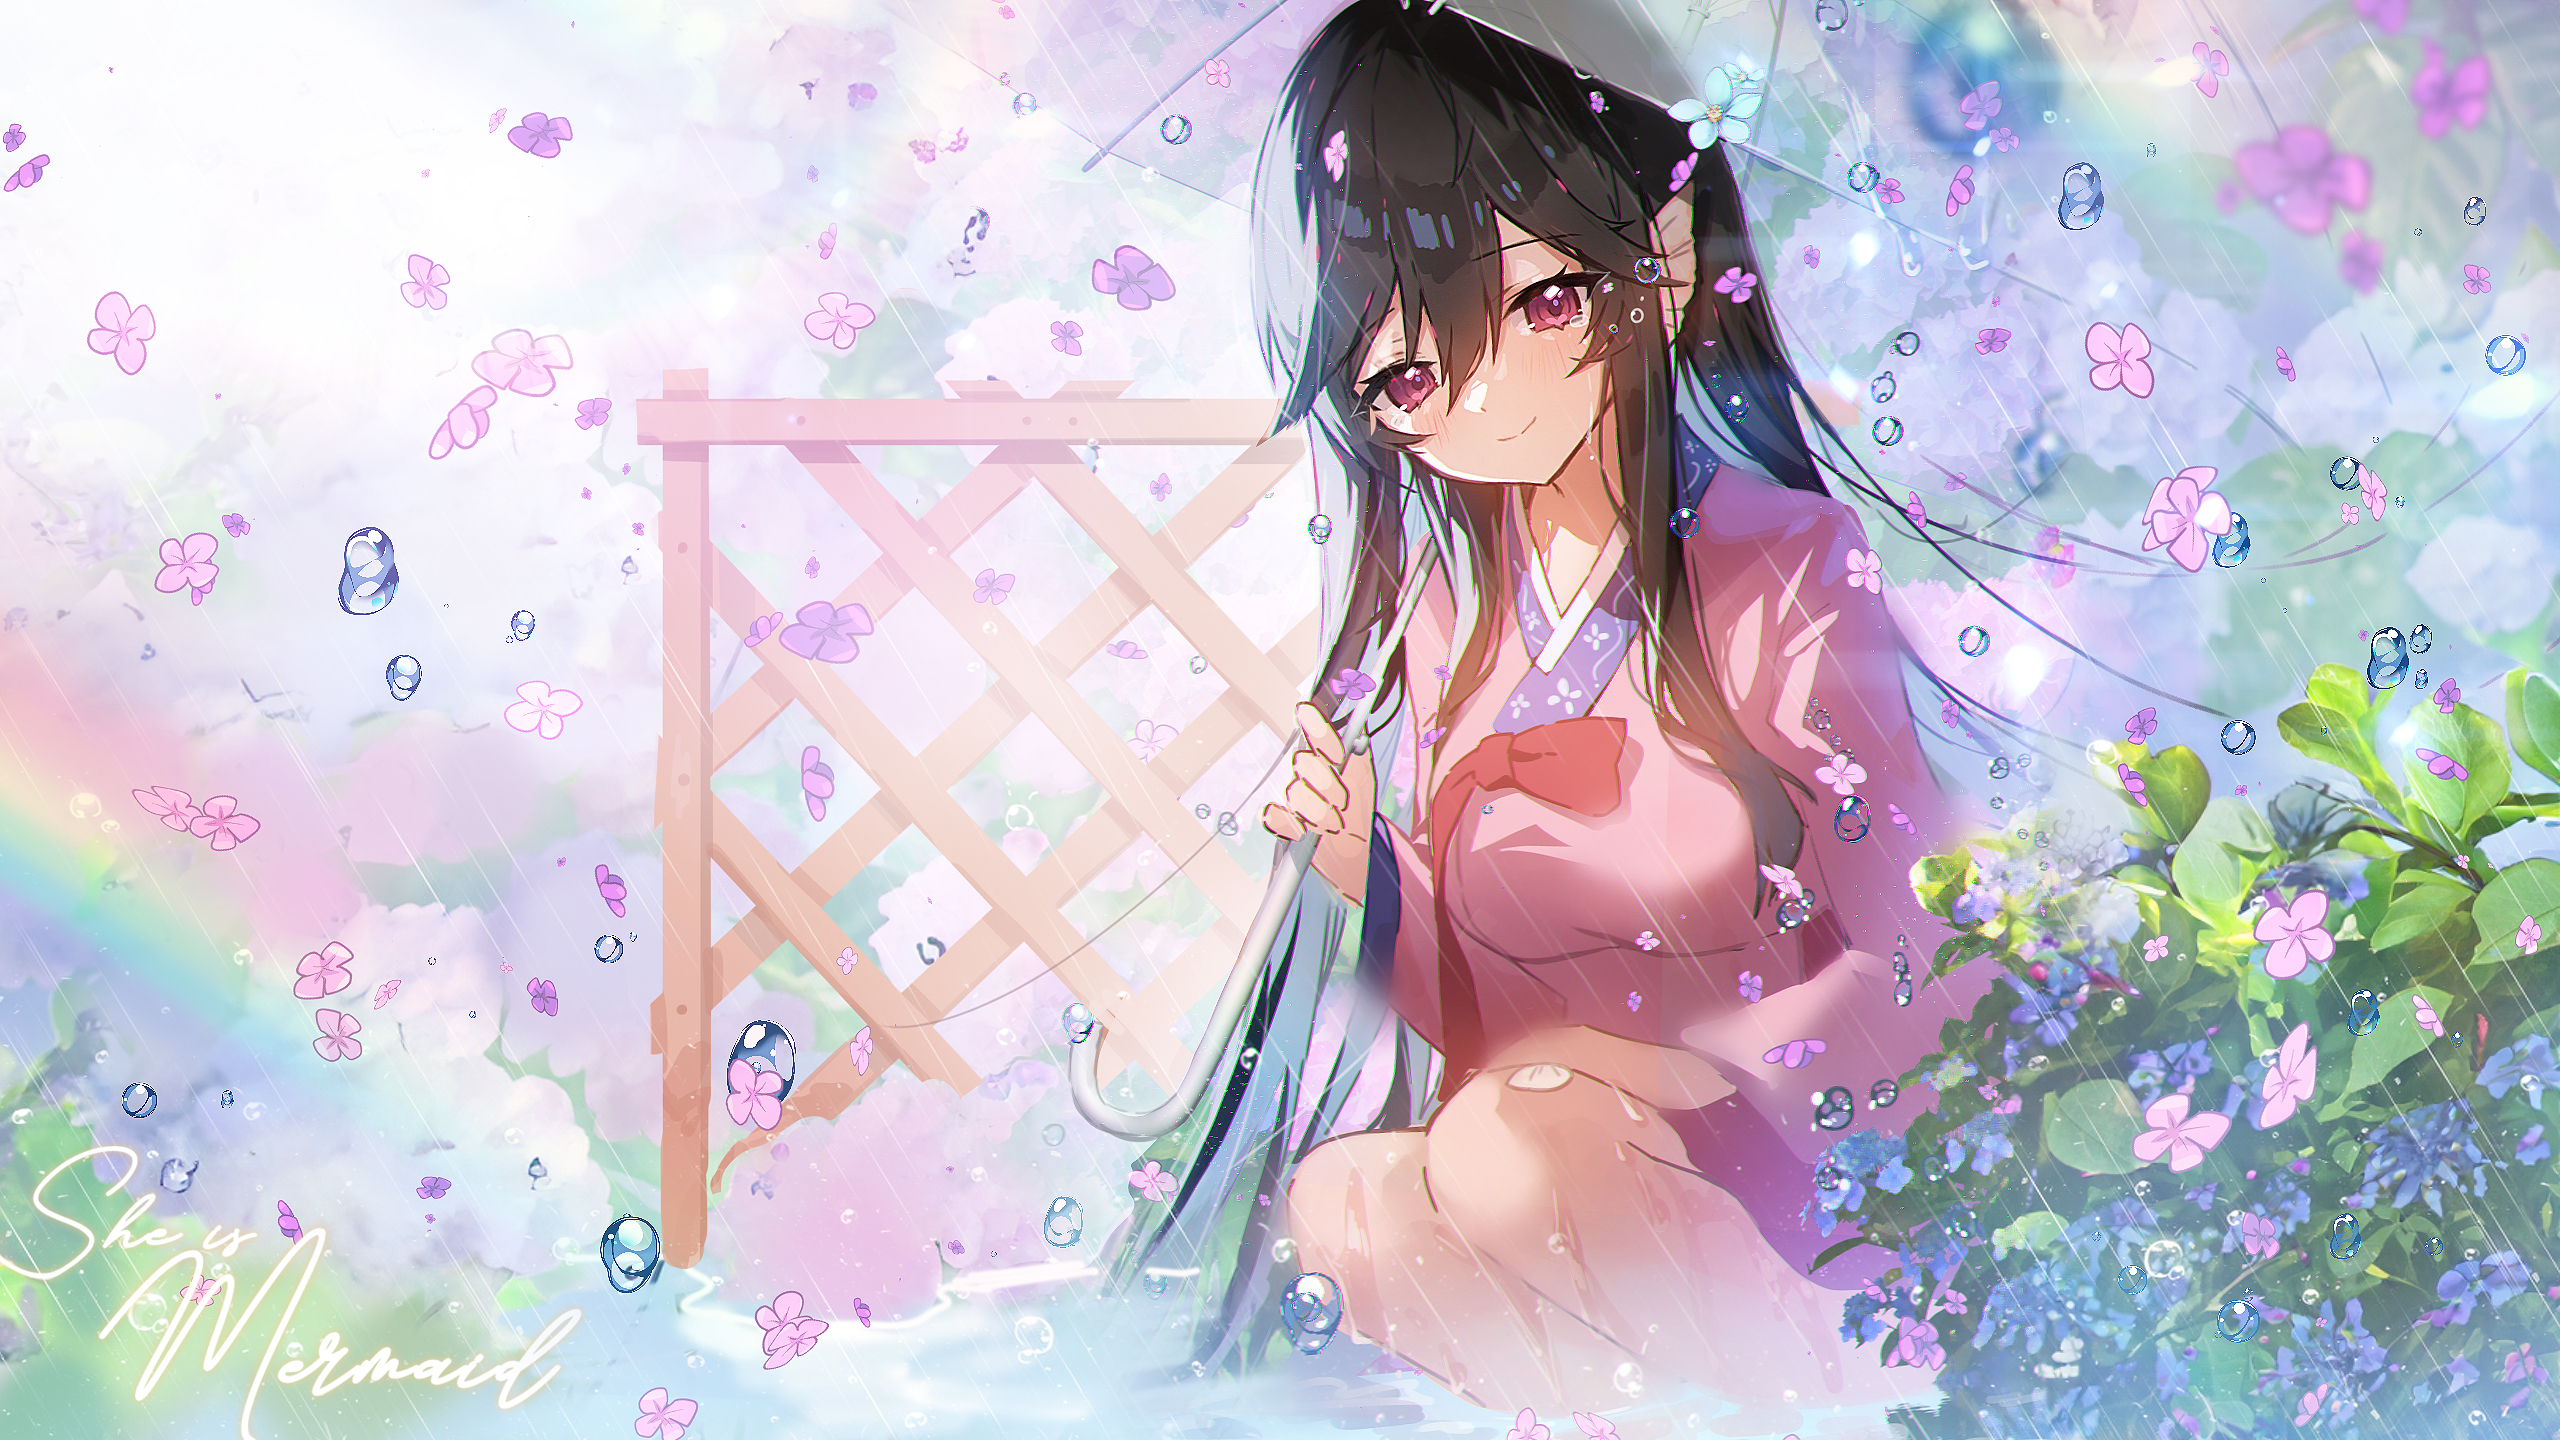 Anime Anime Girls Smiling Long Hair Umbrella Water Drops Petals Flowers Leaves Rainbows Rain Looking 2560x1440